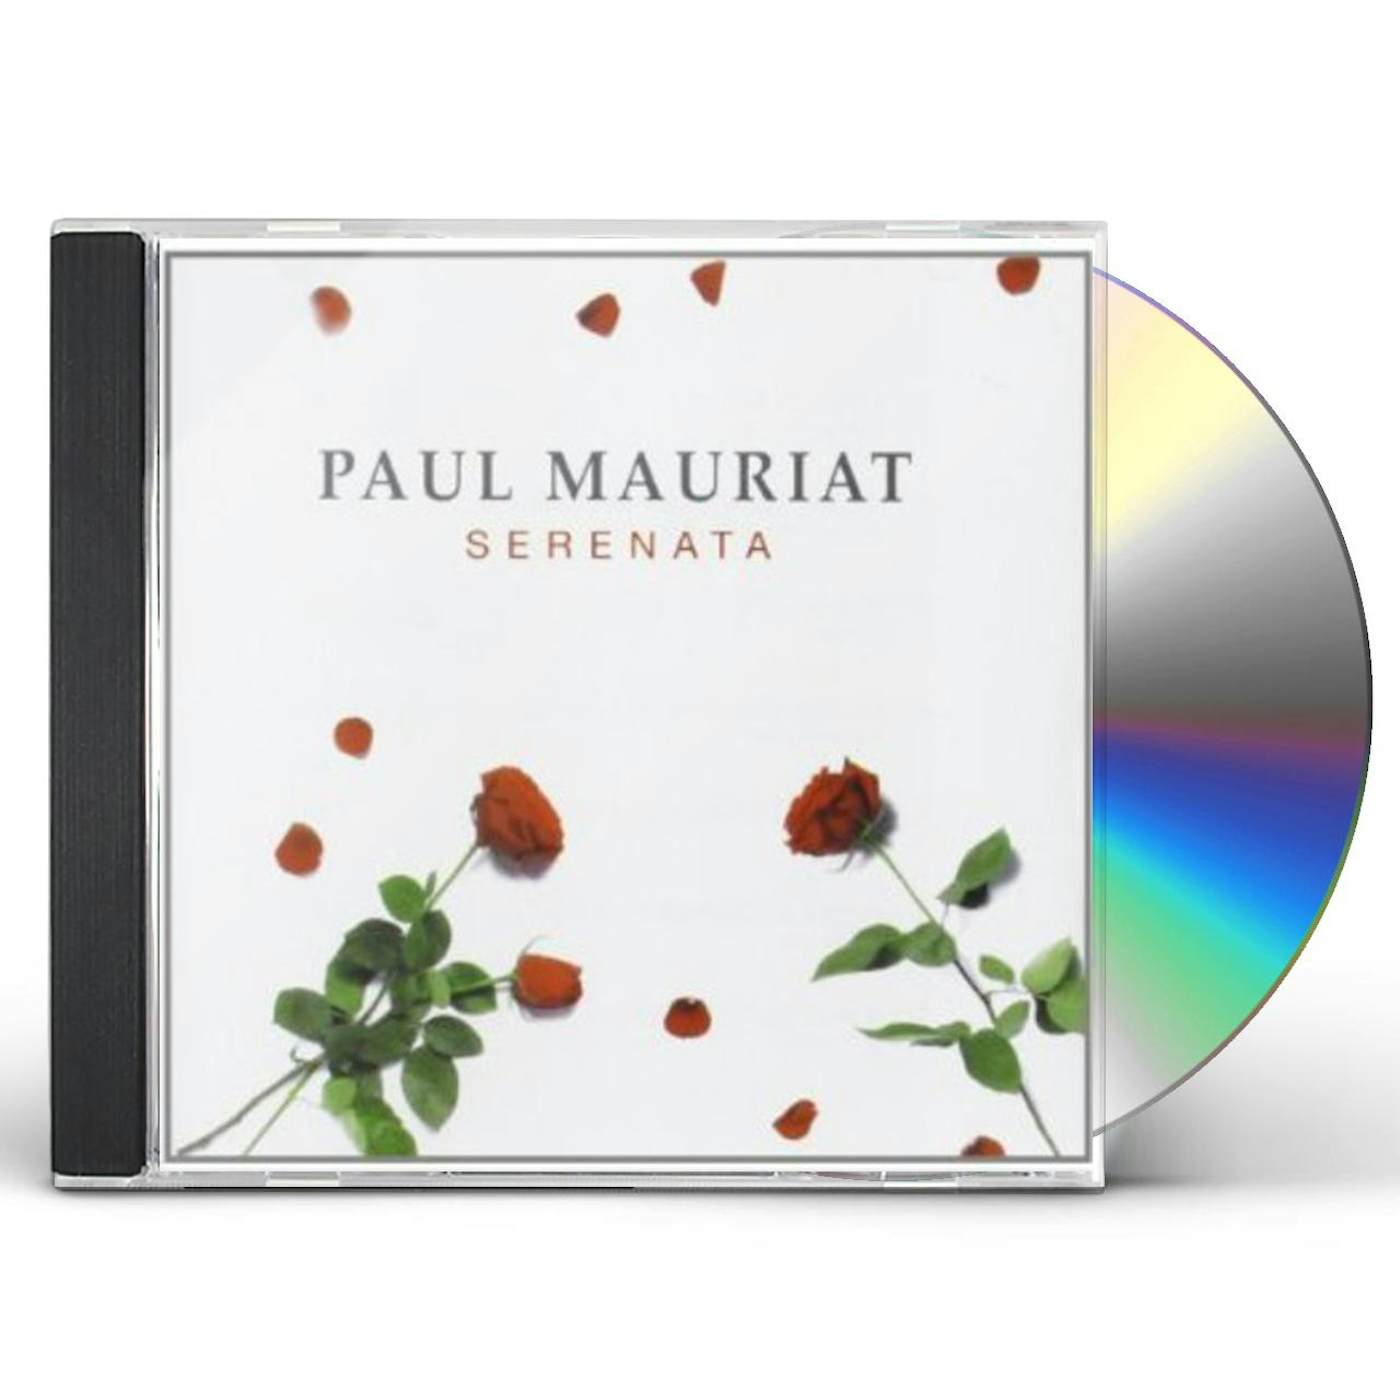 Paul Mauriat SERENATA CD